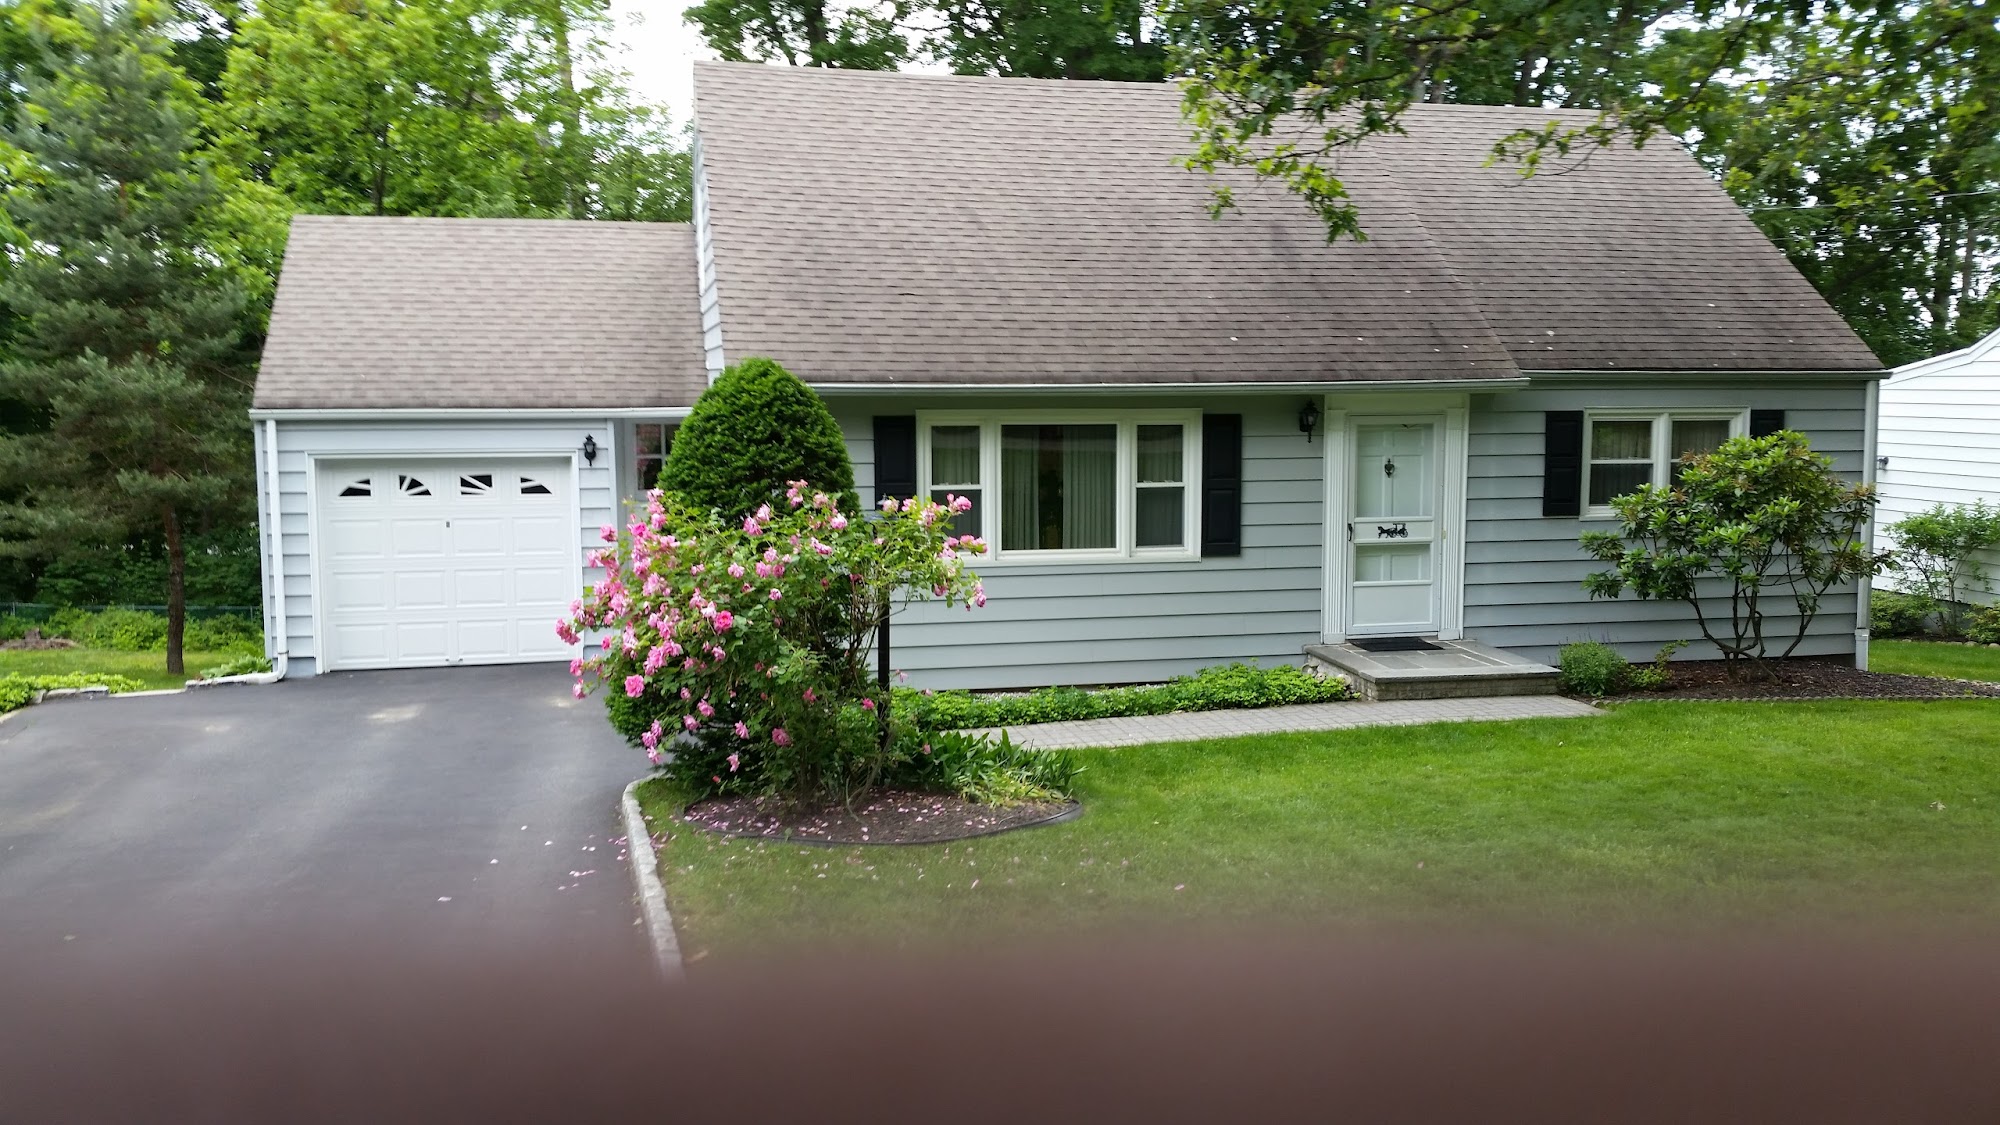 Jon Walch Home Improvement 6 Leamoor Dr, Whippany New Jersey 07981